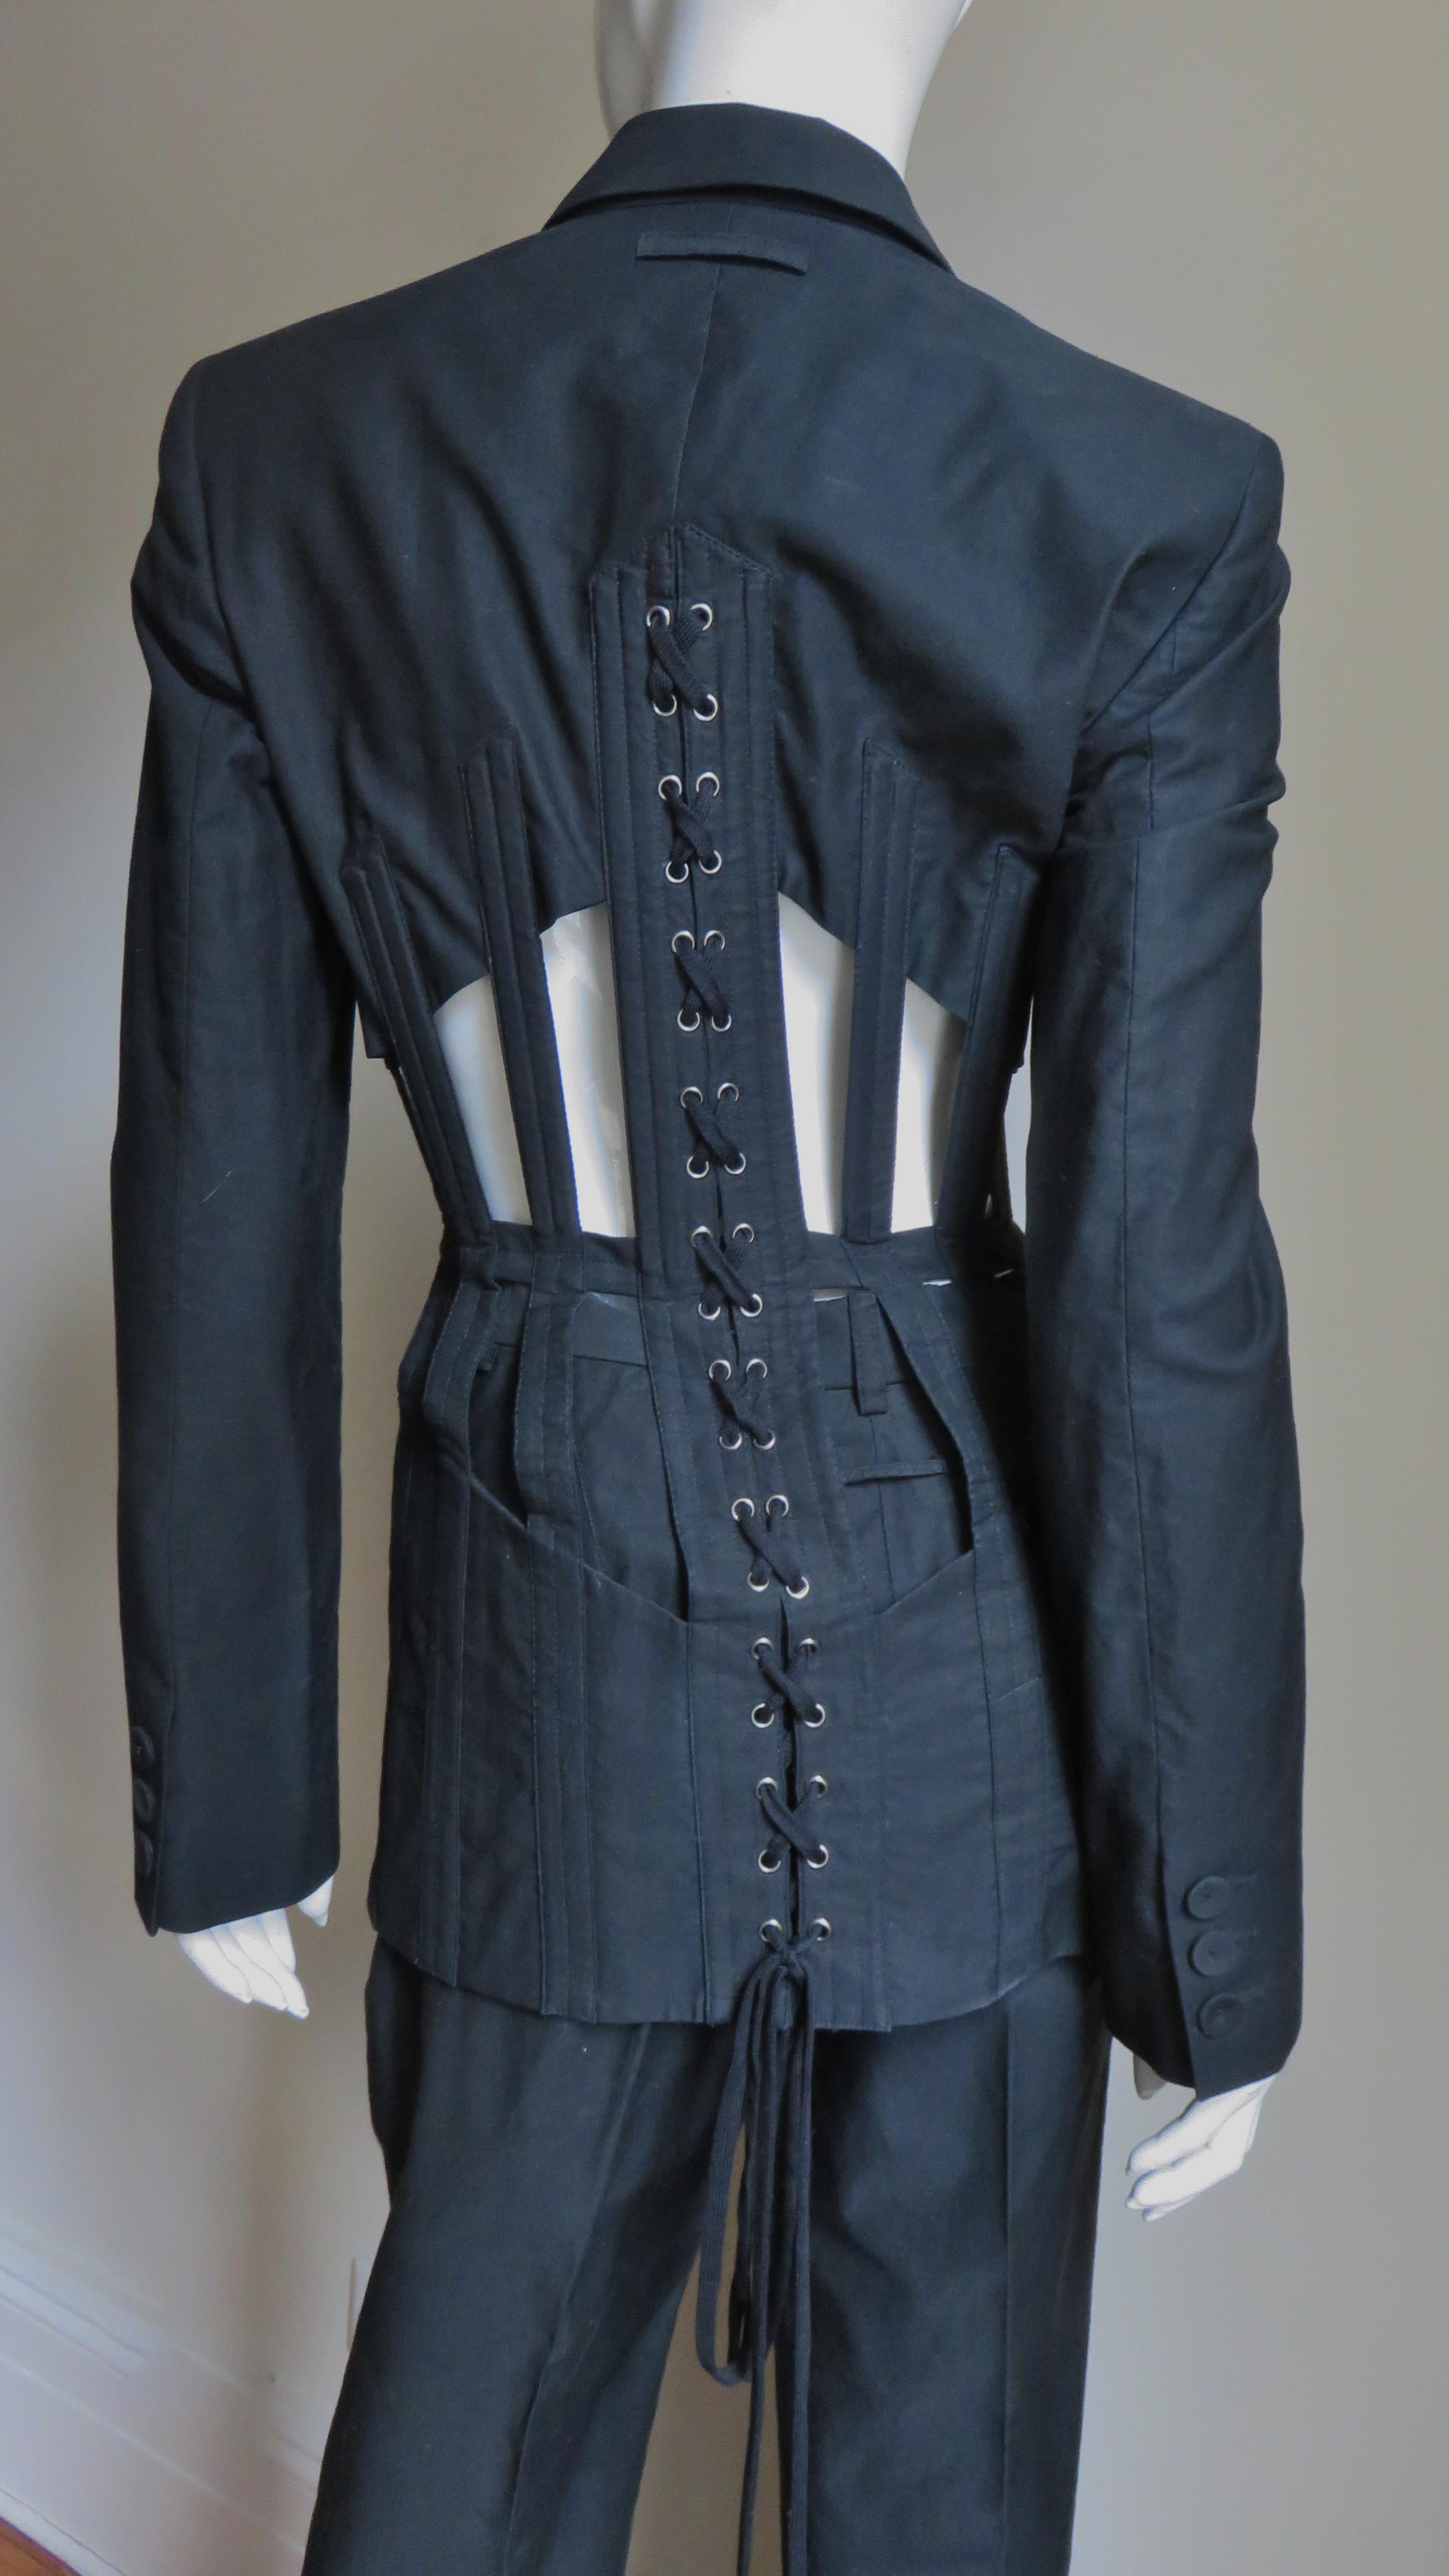 Jean Paul Gaultier Iconic Cage Corset lace up Jacket Pant Suit S/S 1989 For Sale 7